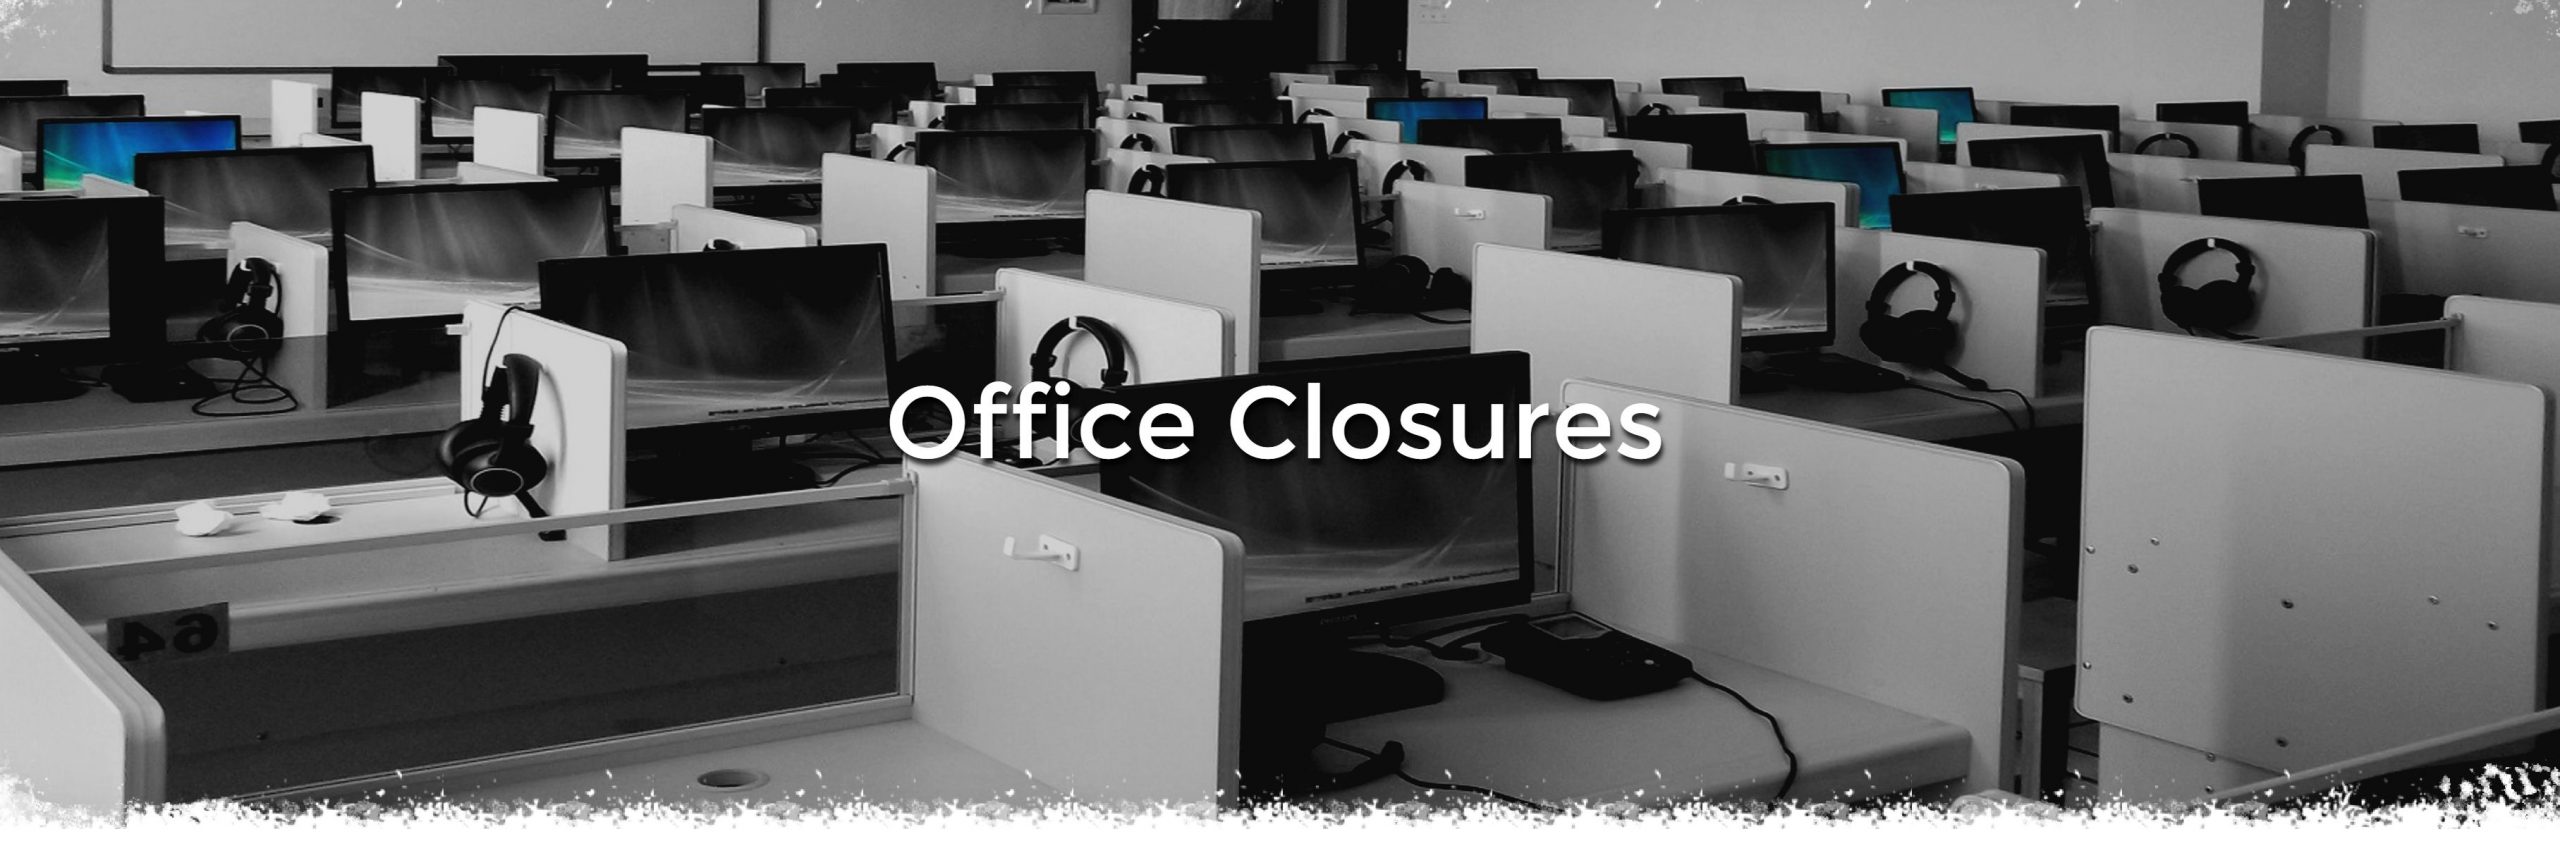 Office Closures